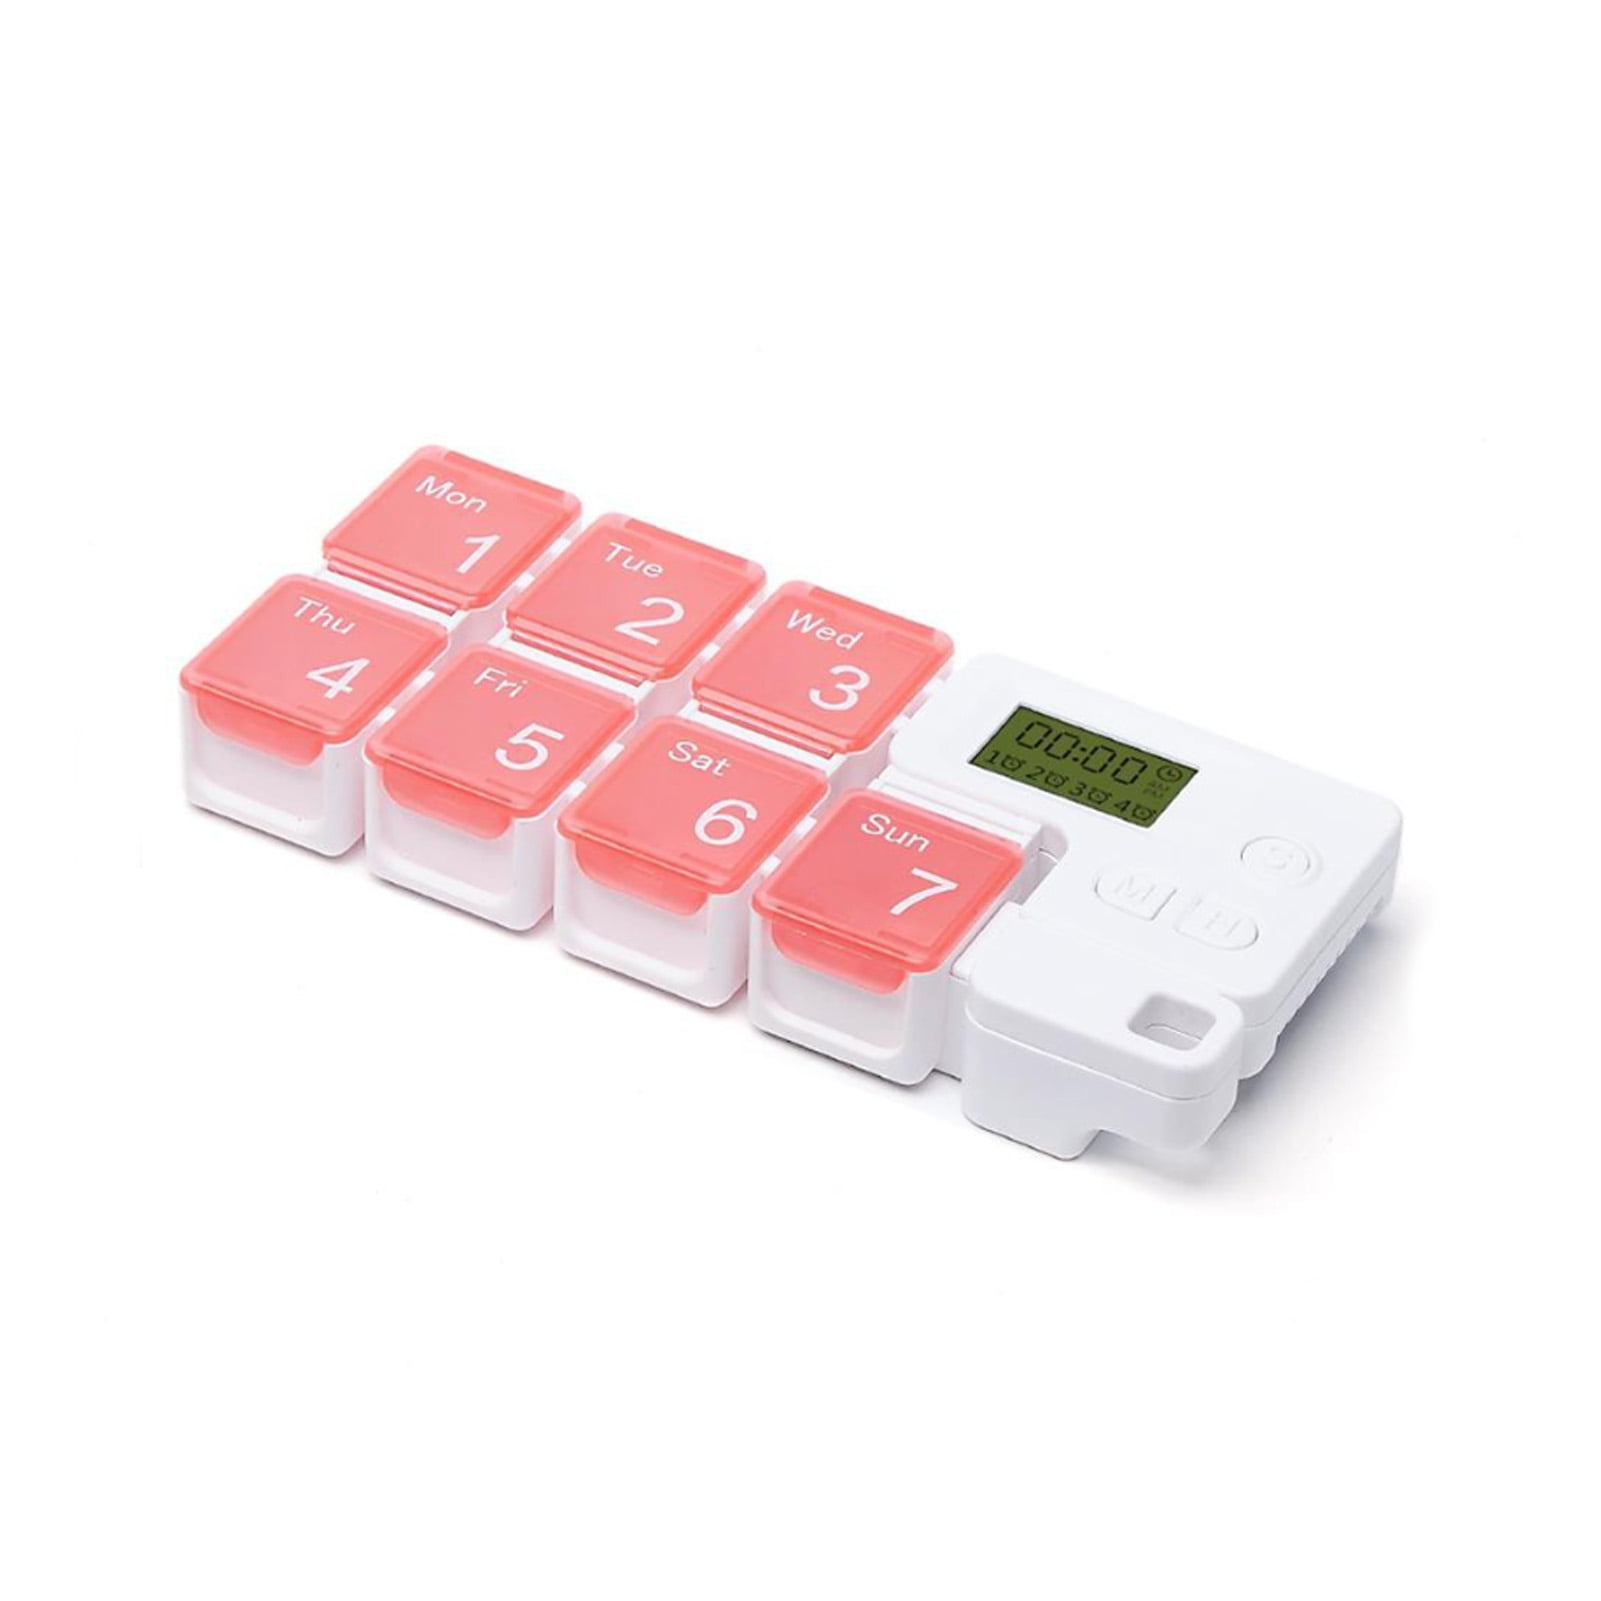 SHIMOYAMA 7 Days Weekly Pill Case Medicine Tablet Holder Pillbox Dispenser  Medicine Cabinet Wall Storage Organizer Container